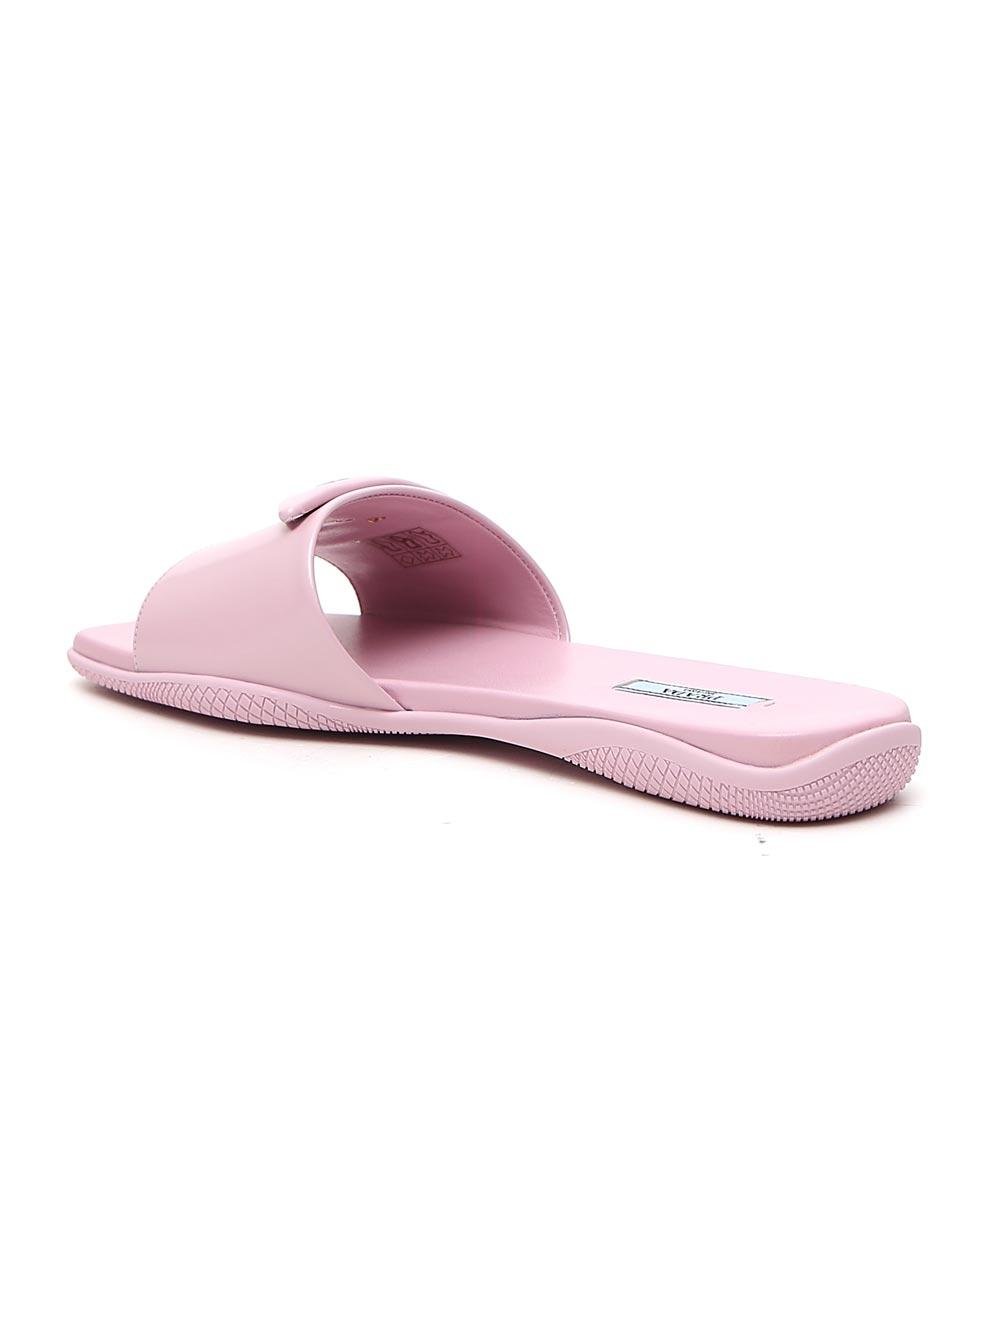 Prada Leather Triangle Logo Slide Sandals in Pink - Lyst